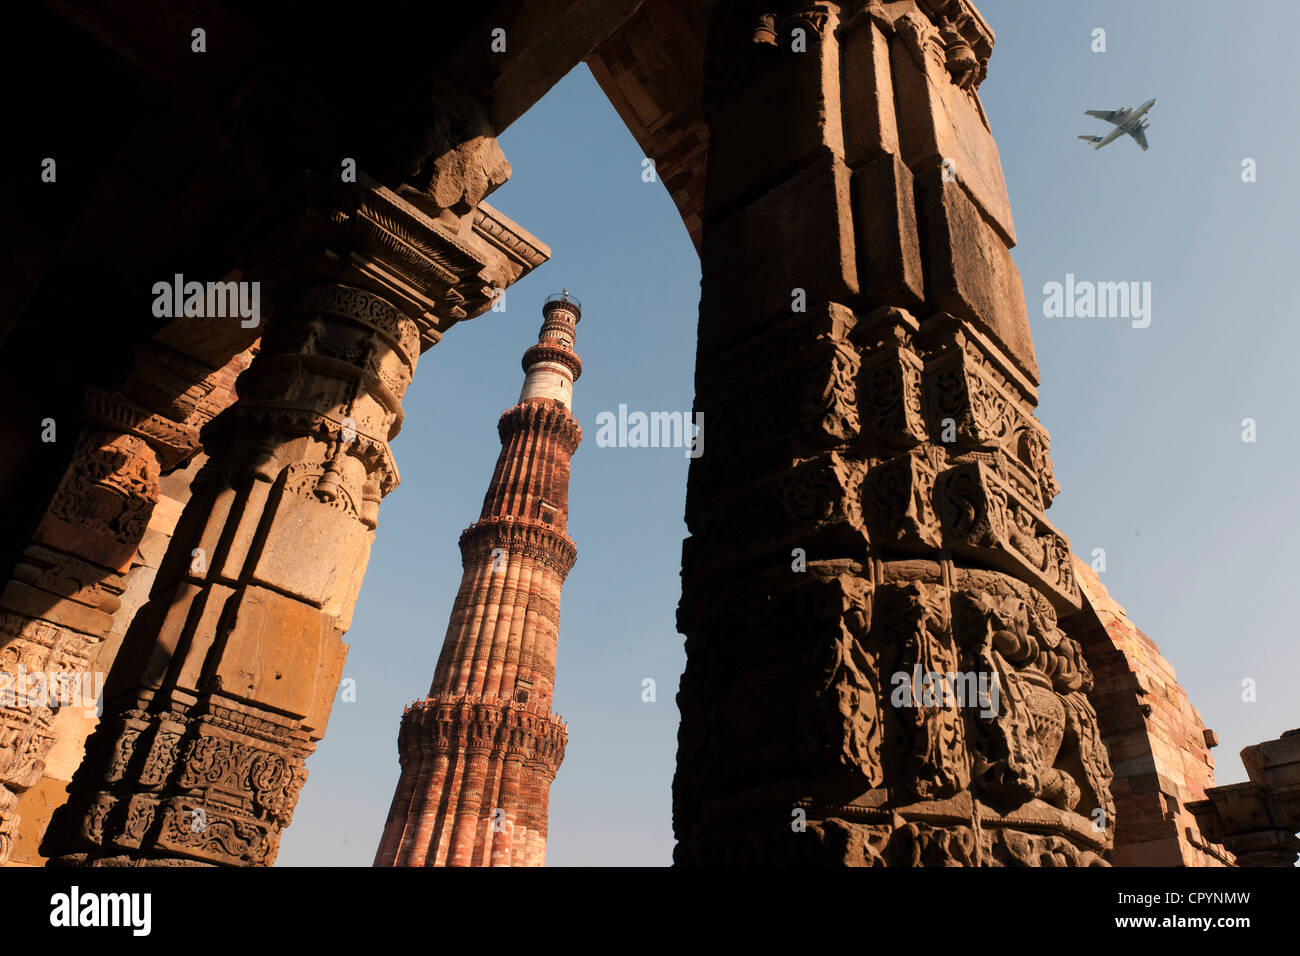 Qutb Minar minaret with aircraft flying above, UNESCO World Cultural Heritage, New Delhi, India Stock Photo